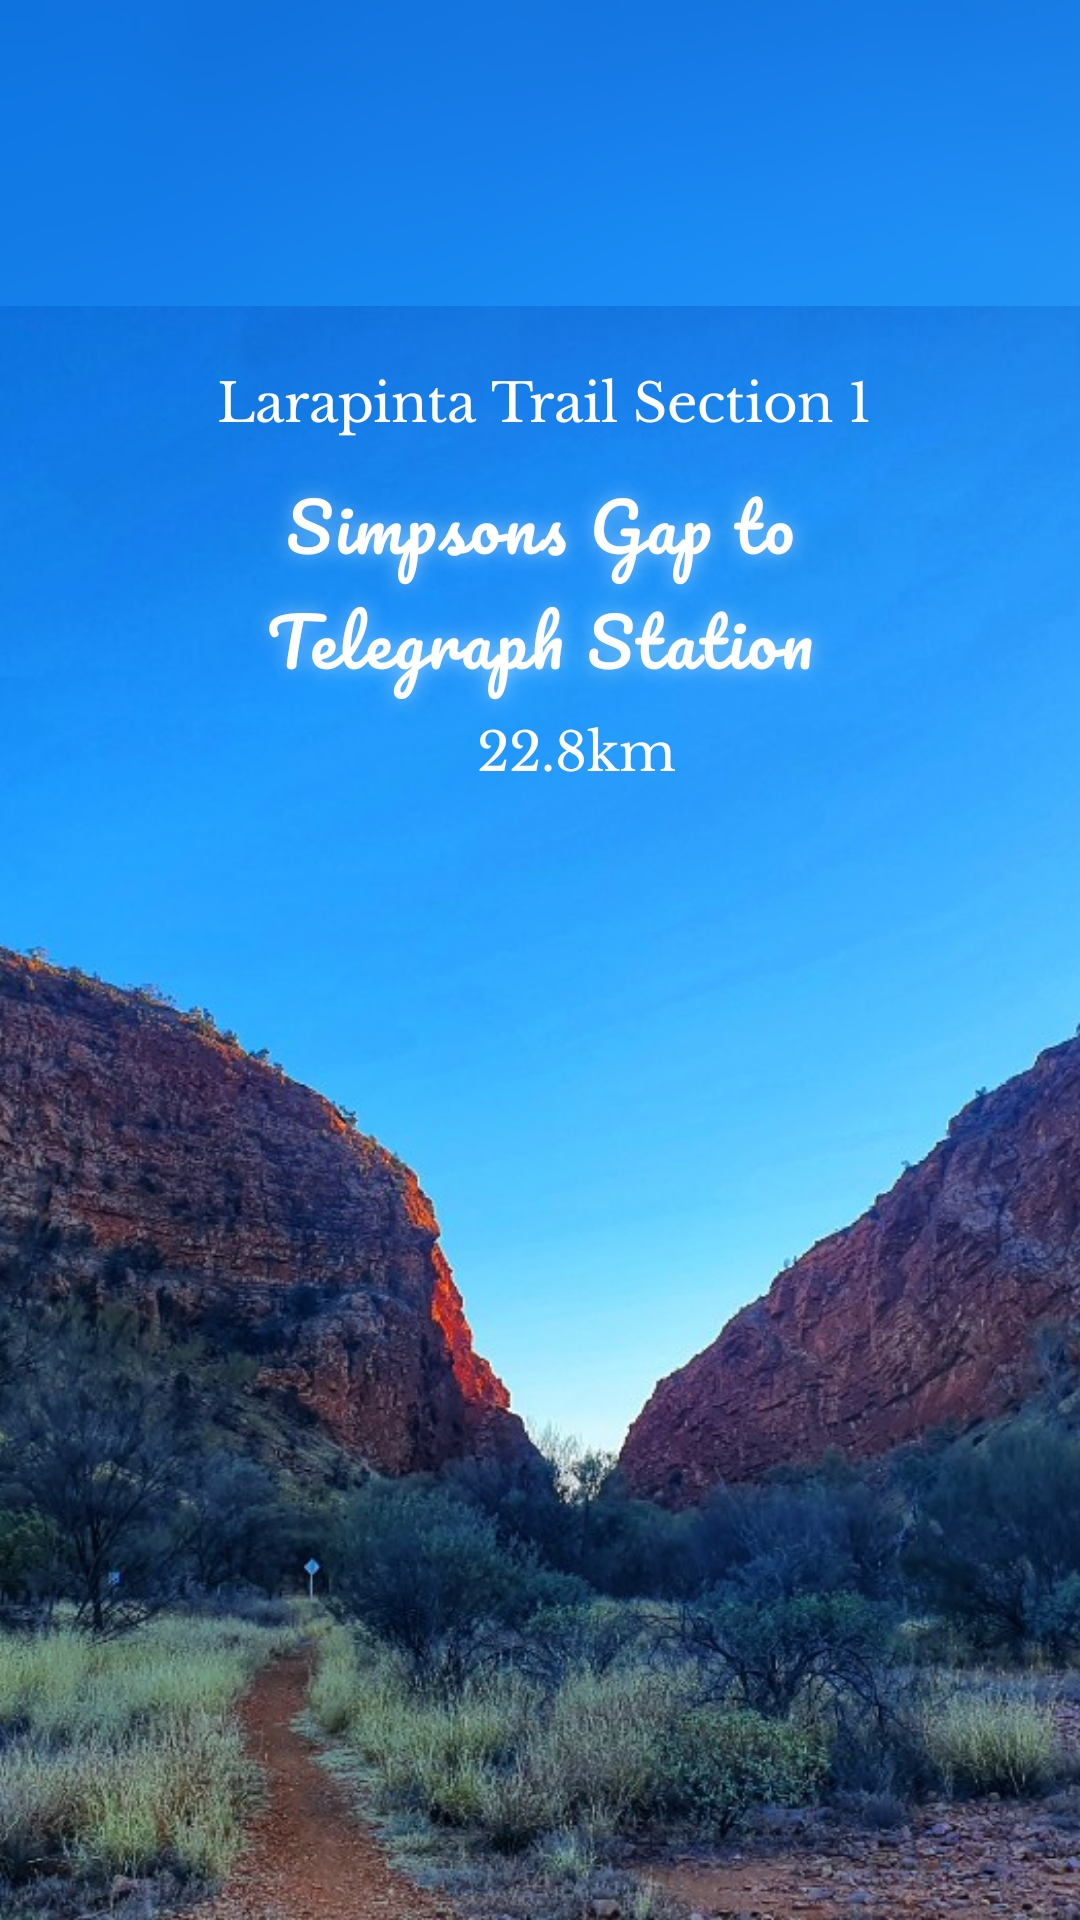 Larapinta Trail Section 1 22.8km Simpsons Gap to Telegraph Station